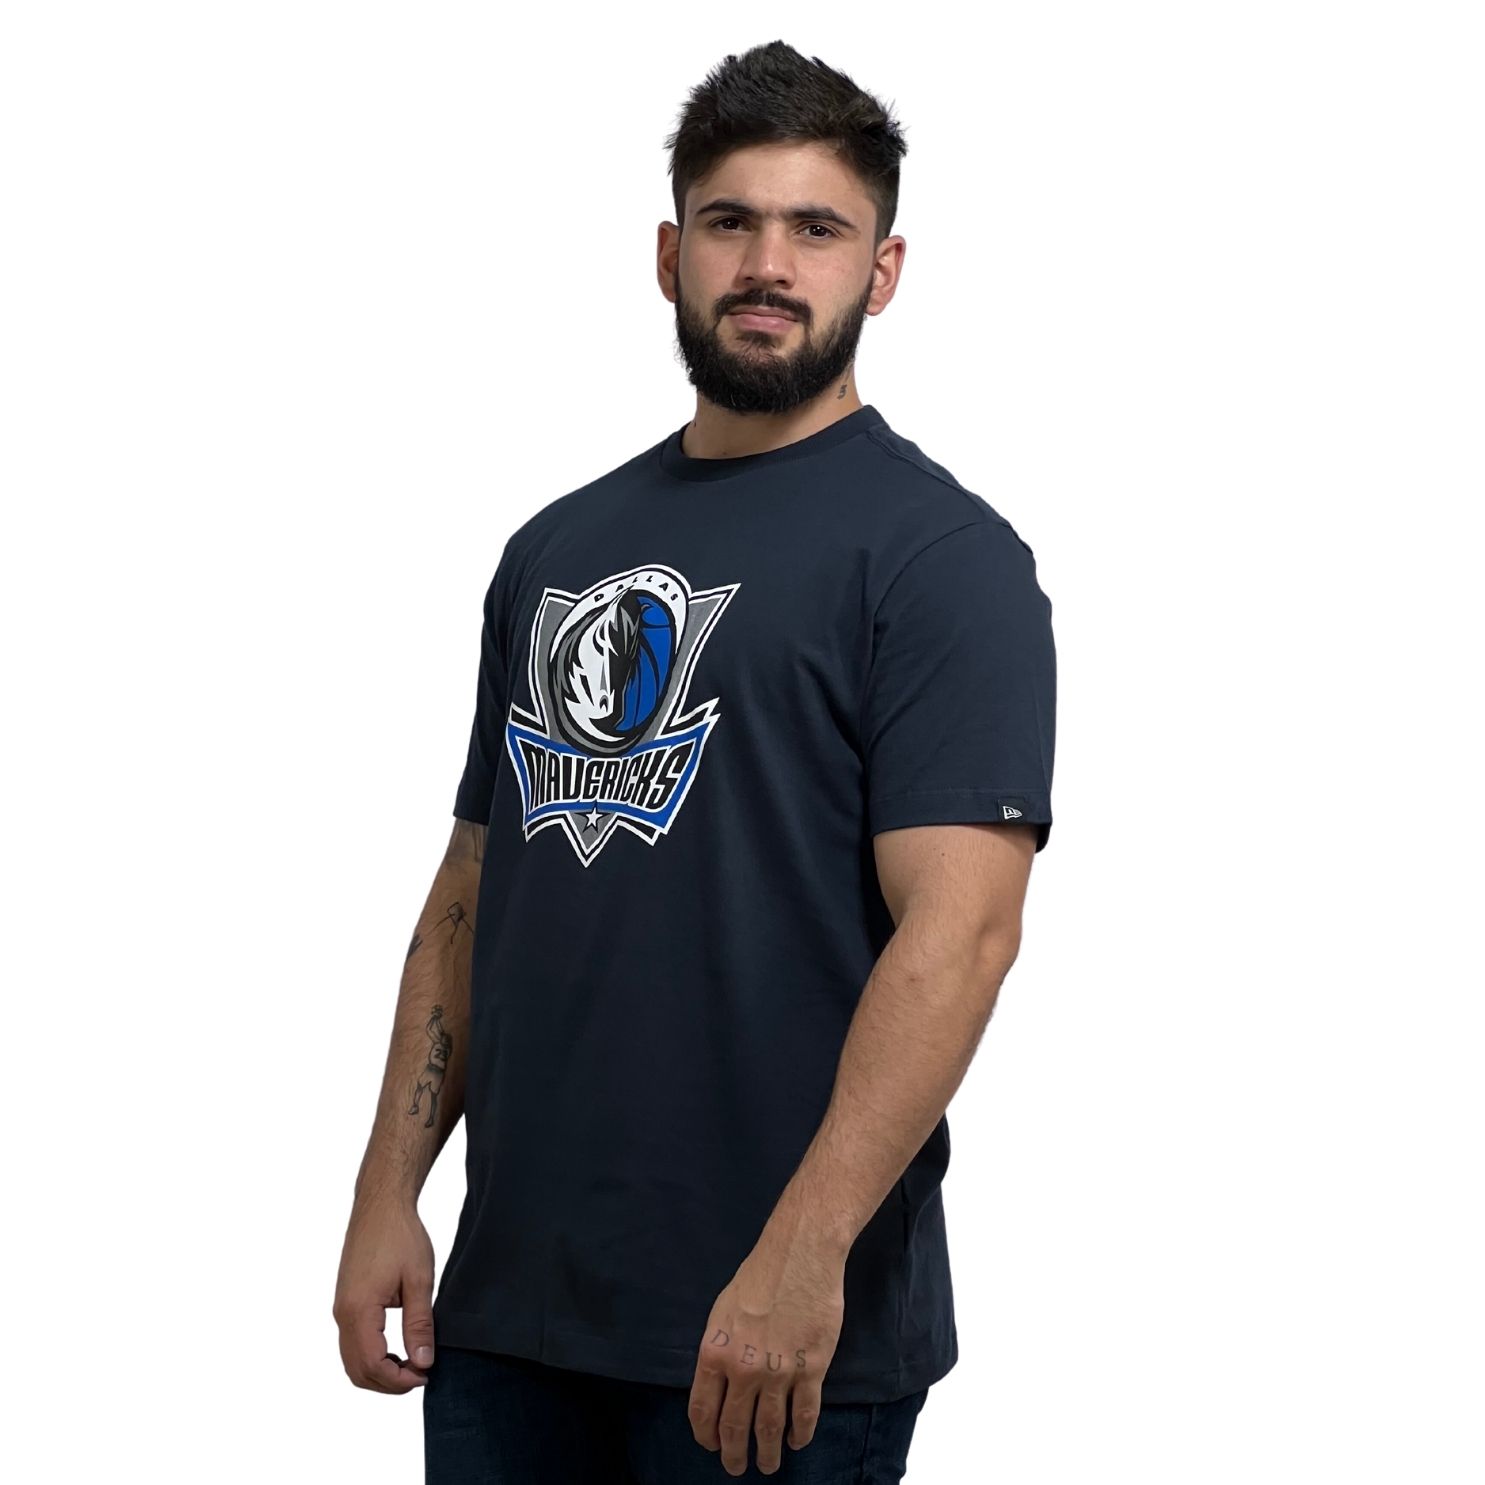 Camiseta New Era NBA Dallas Mavericks NBI21TSH061 Azul Marinho